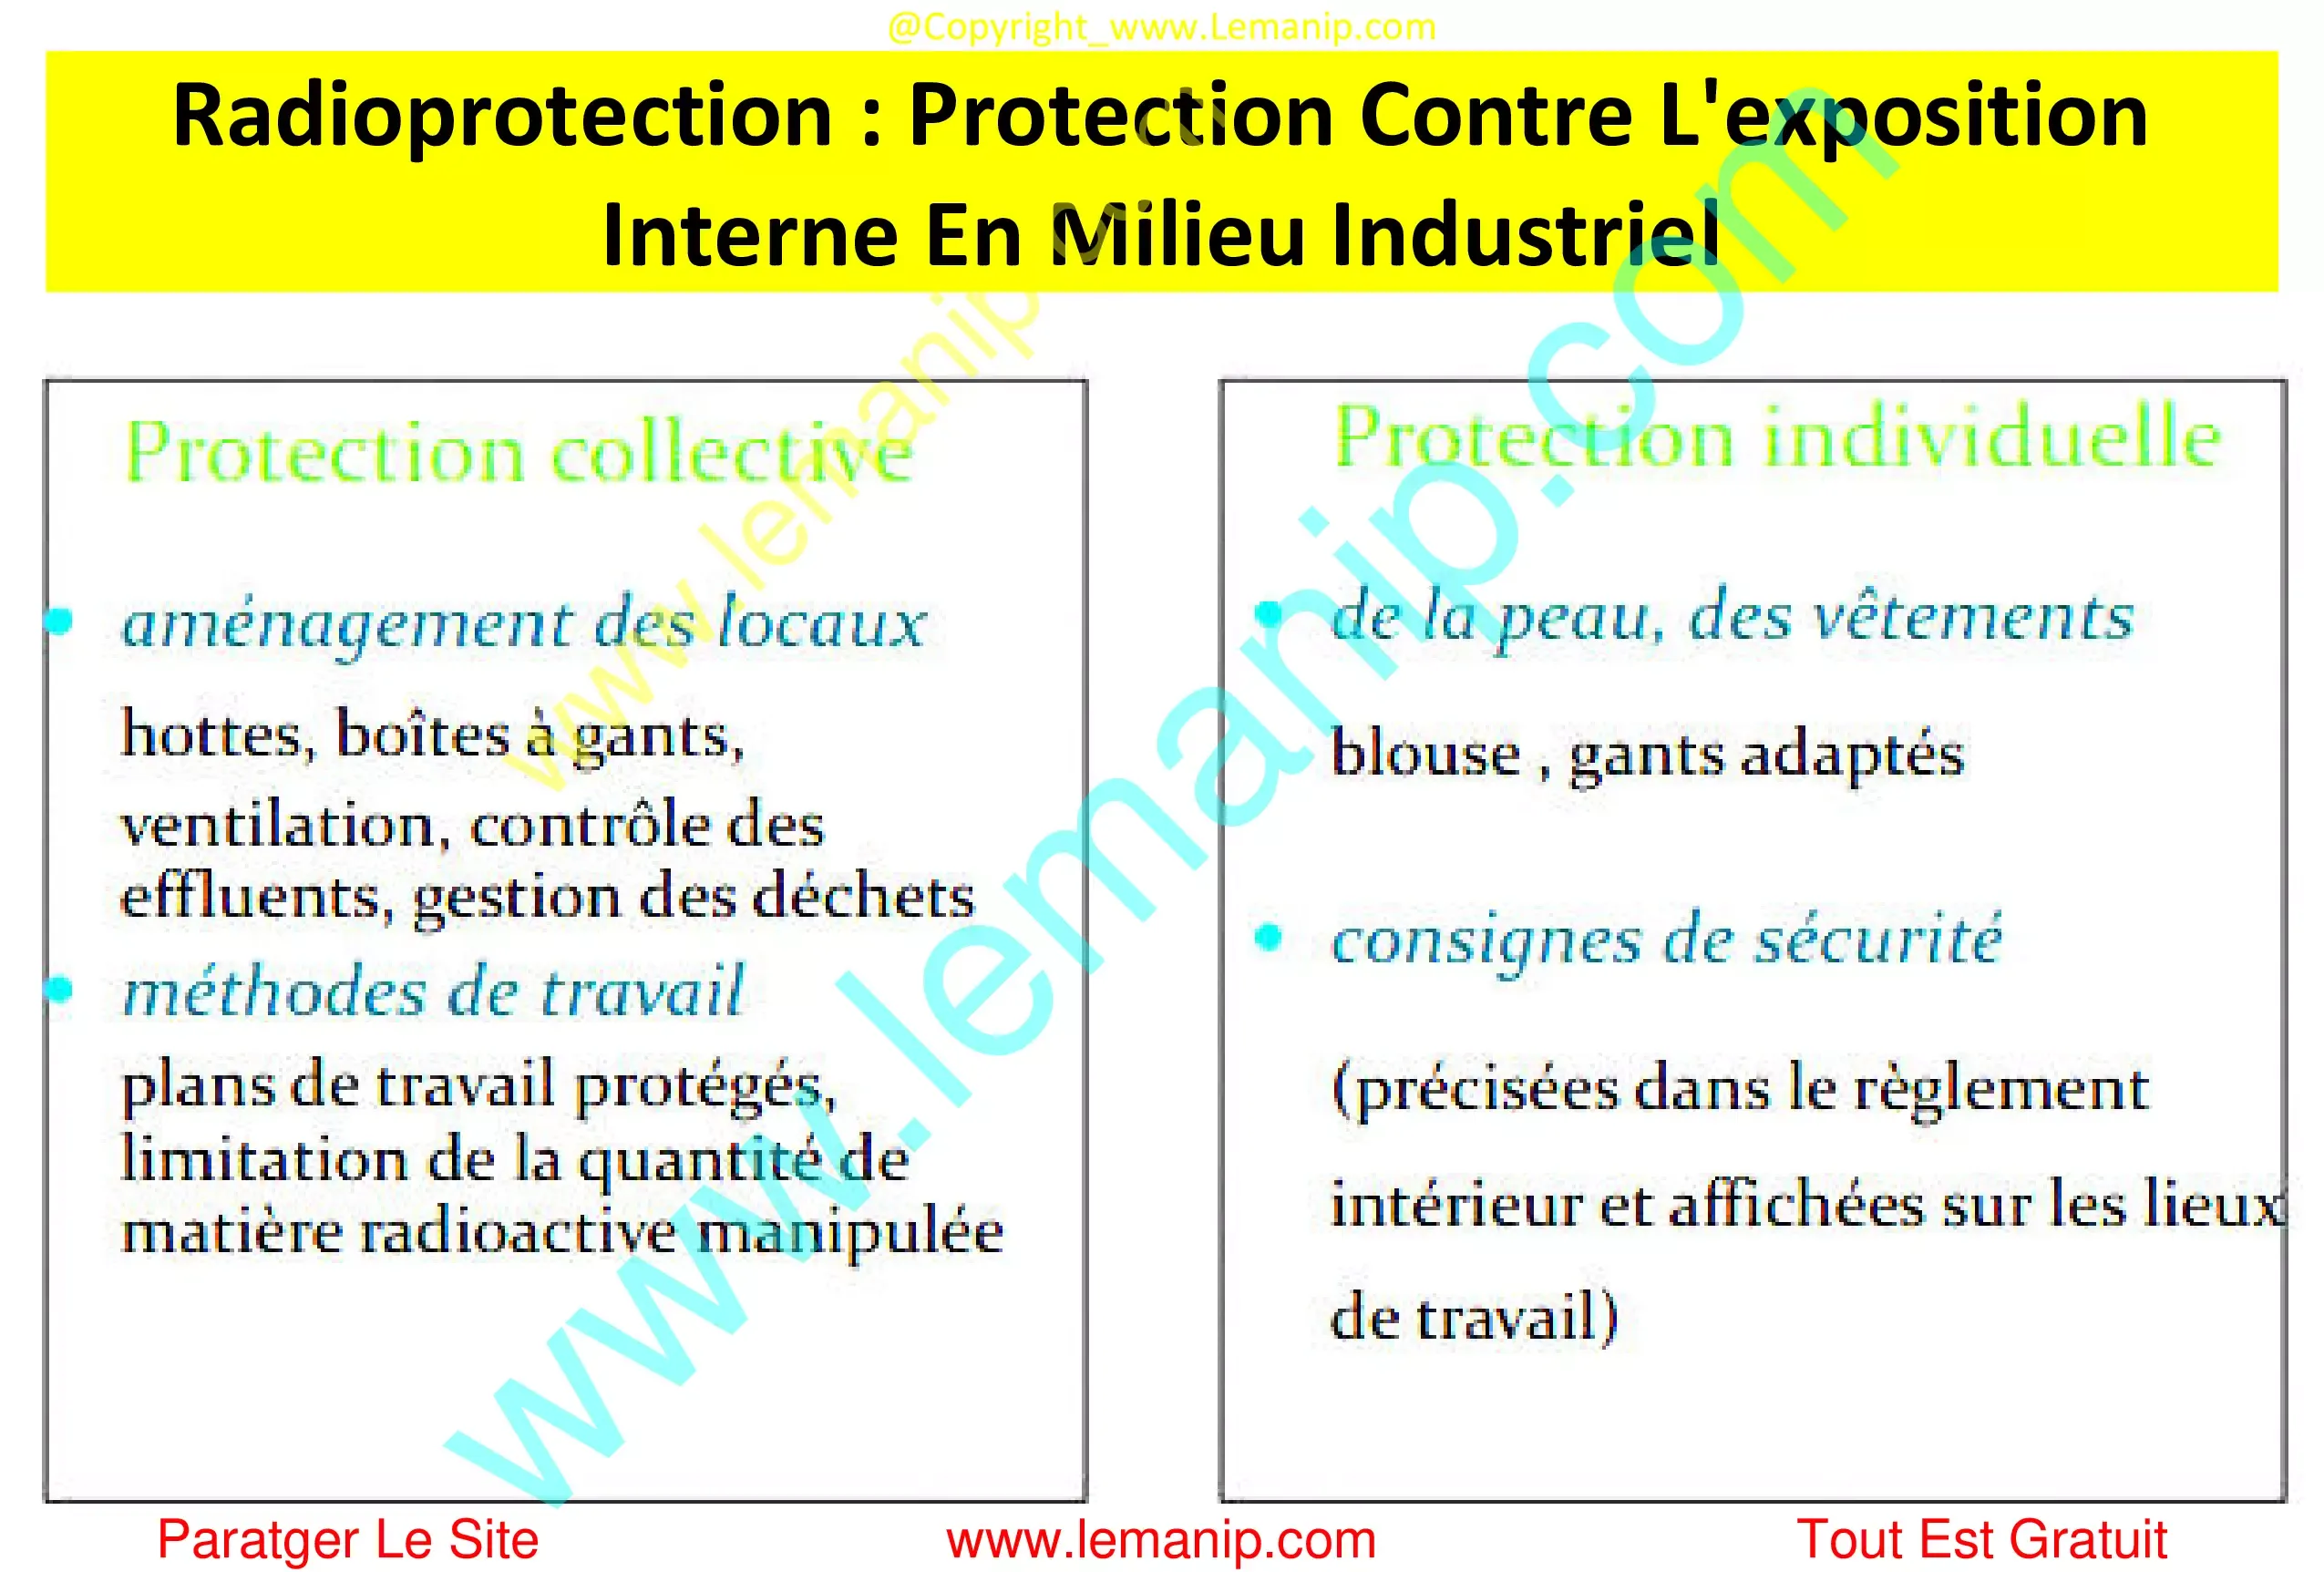 Radioprotection : Protection Contre L'exposition Interne En Milieu Industriel